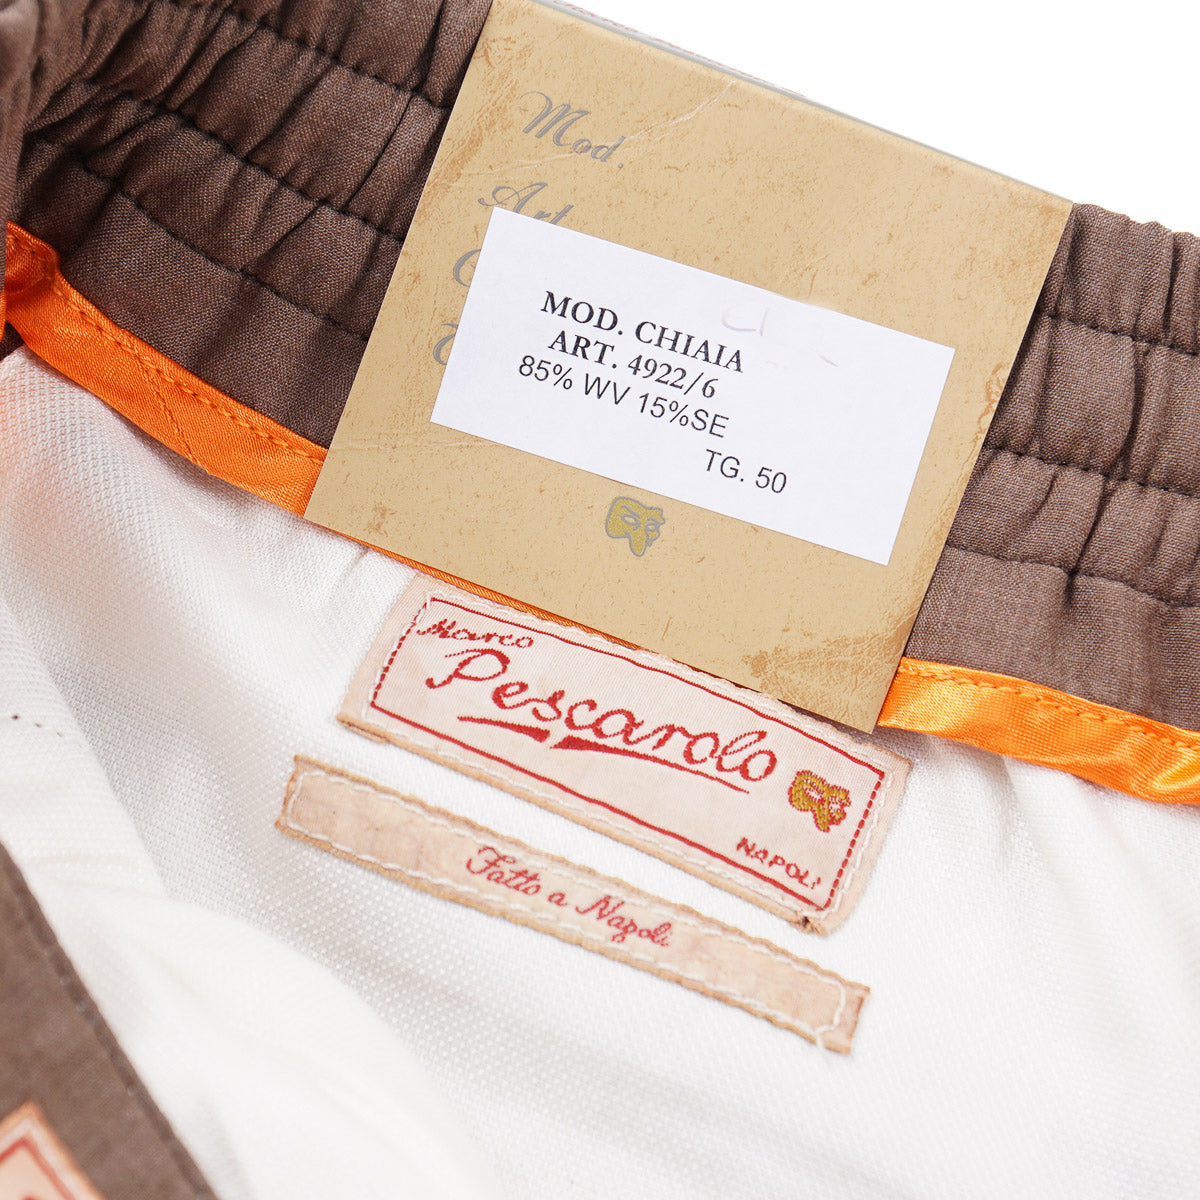 Marco Pescarolo Lightweight Wool-Silk Pants - Top Shelf Apparel